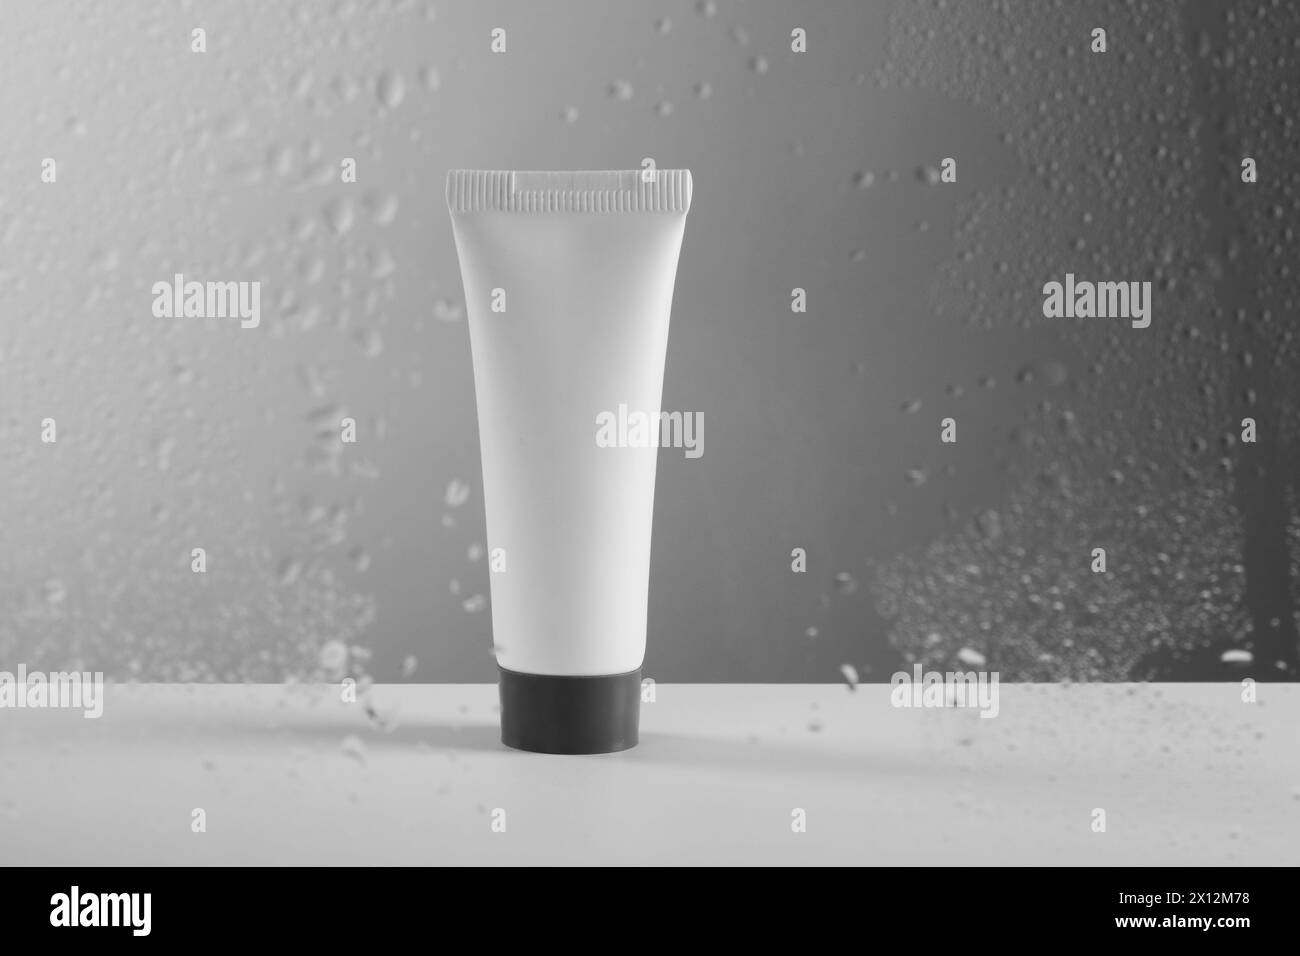 Tube with moisturizing cream on grey background, view through wet glass Stock Photo